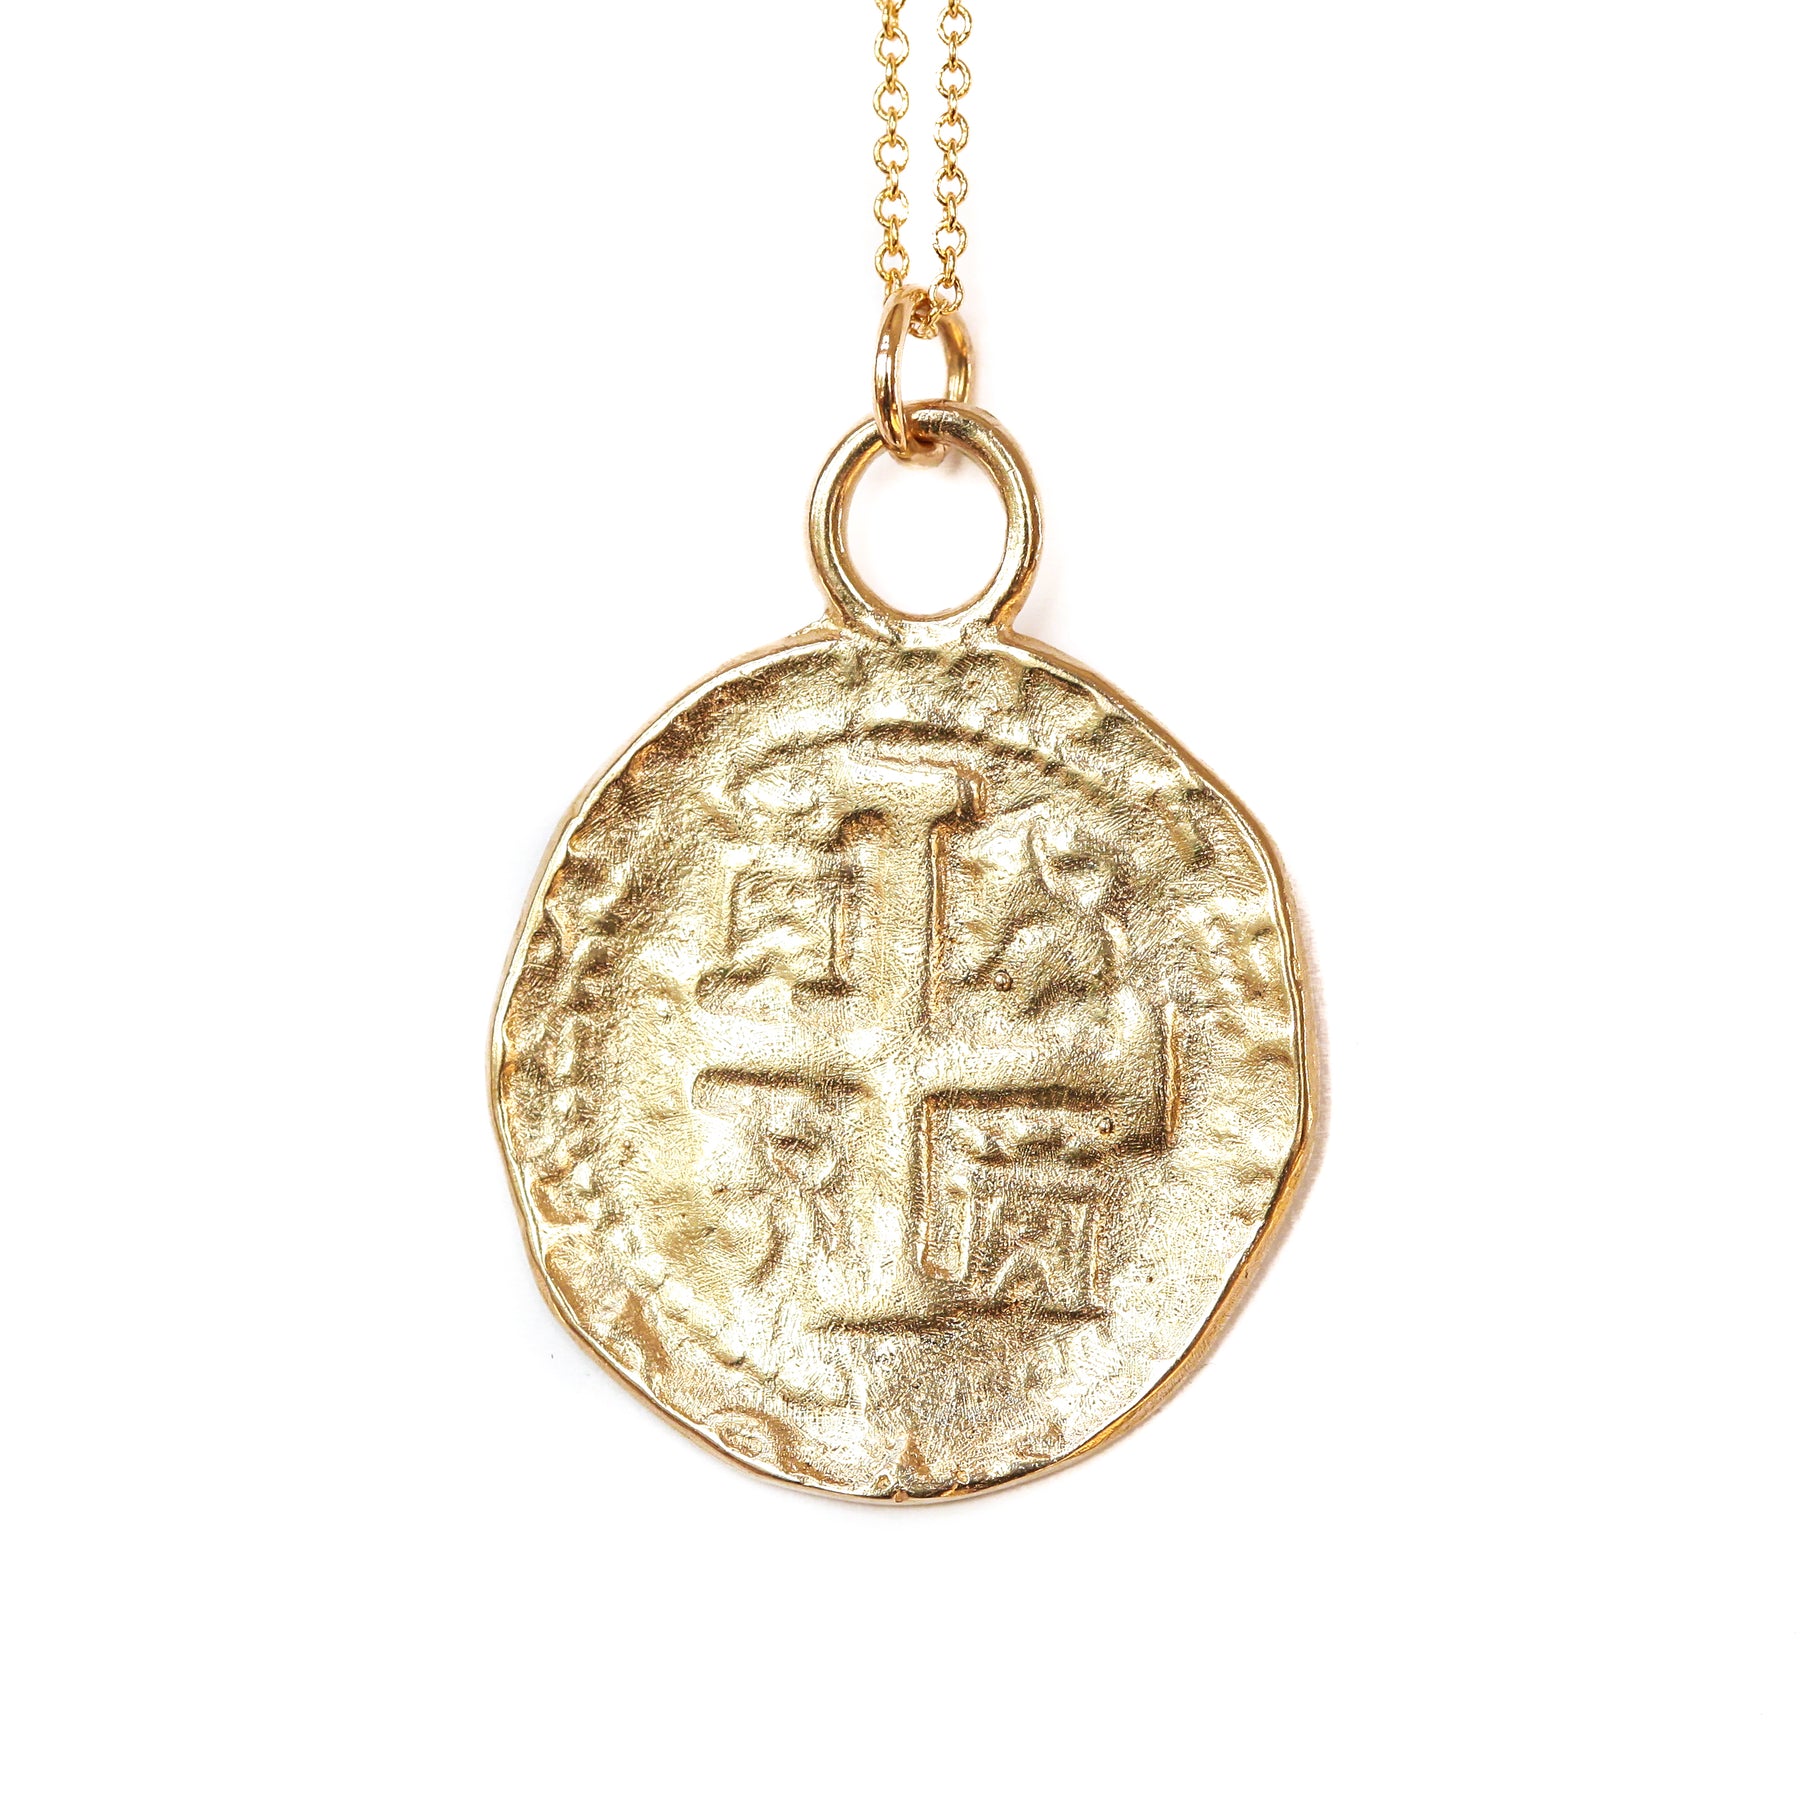 Knights Templar Era Cilician Armenian Crusader Authentic Coin Pendant -  Cannon Beach Treasure Company